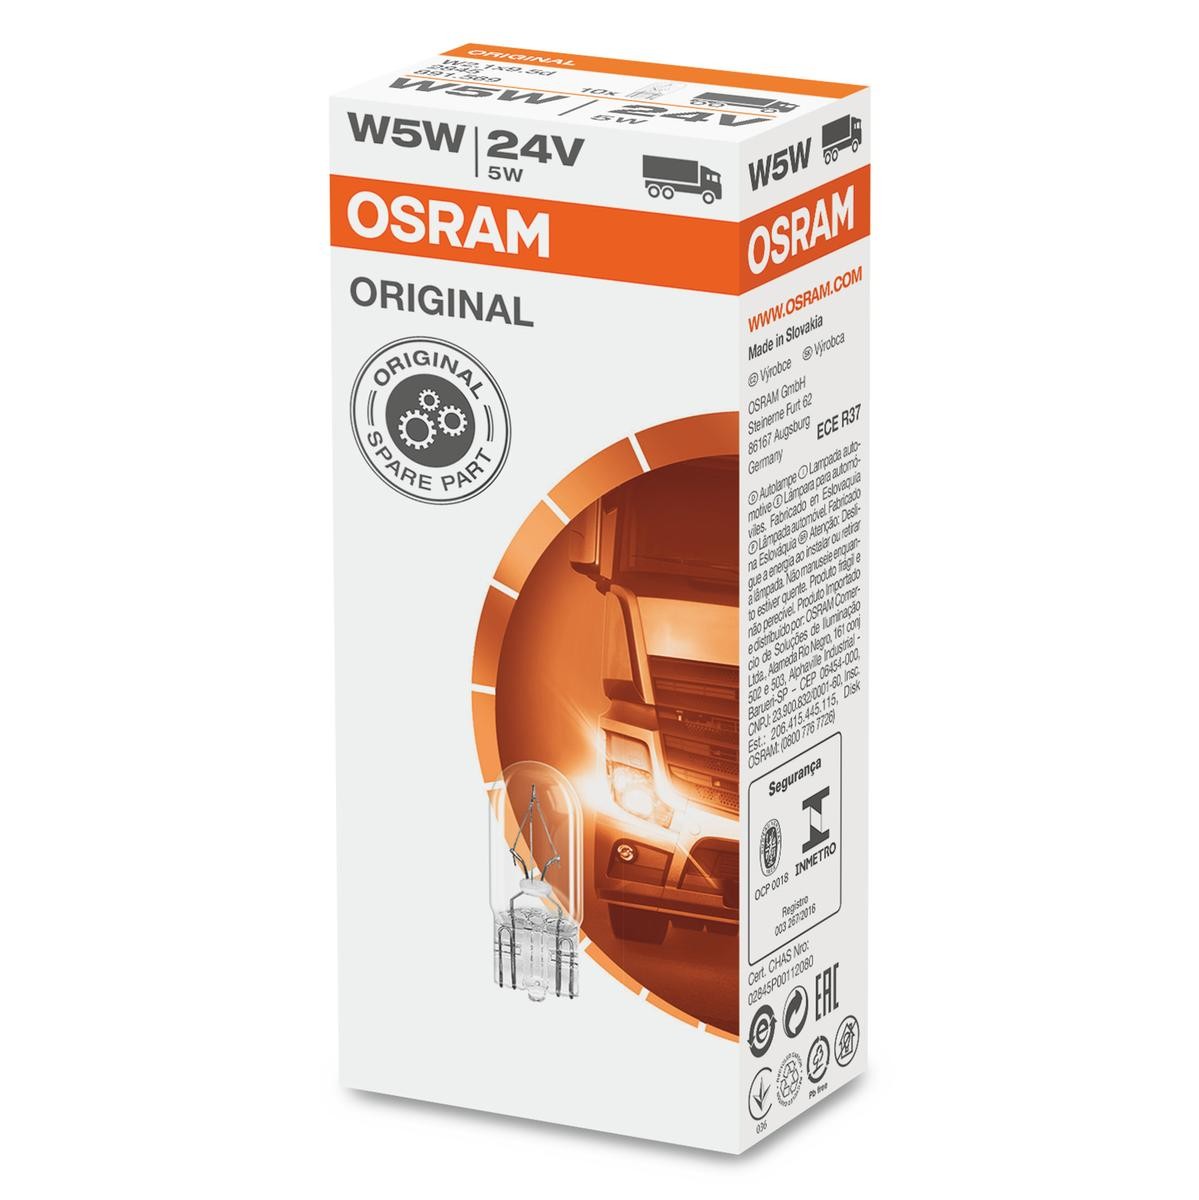 W5W OSRAM ORIGINAL LINE 24V 5W, W5W Bulb, indicator 2845 buy